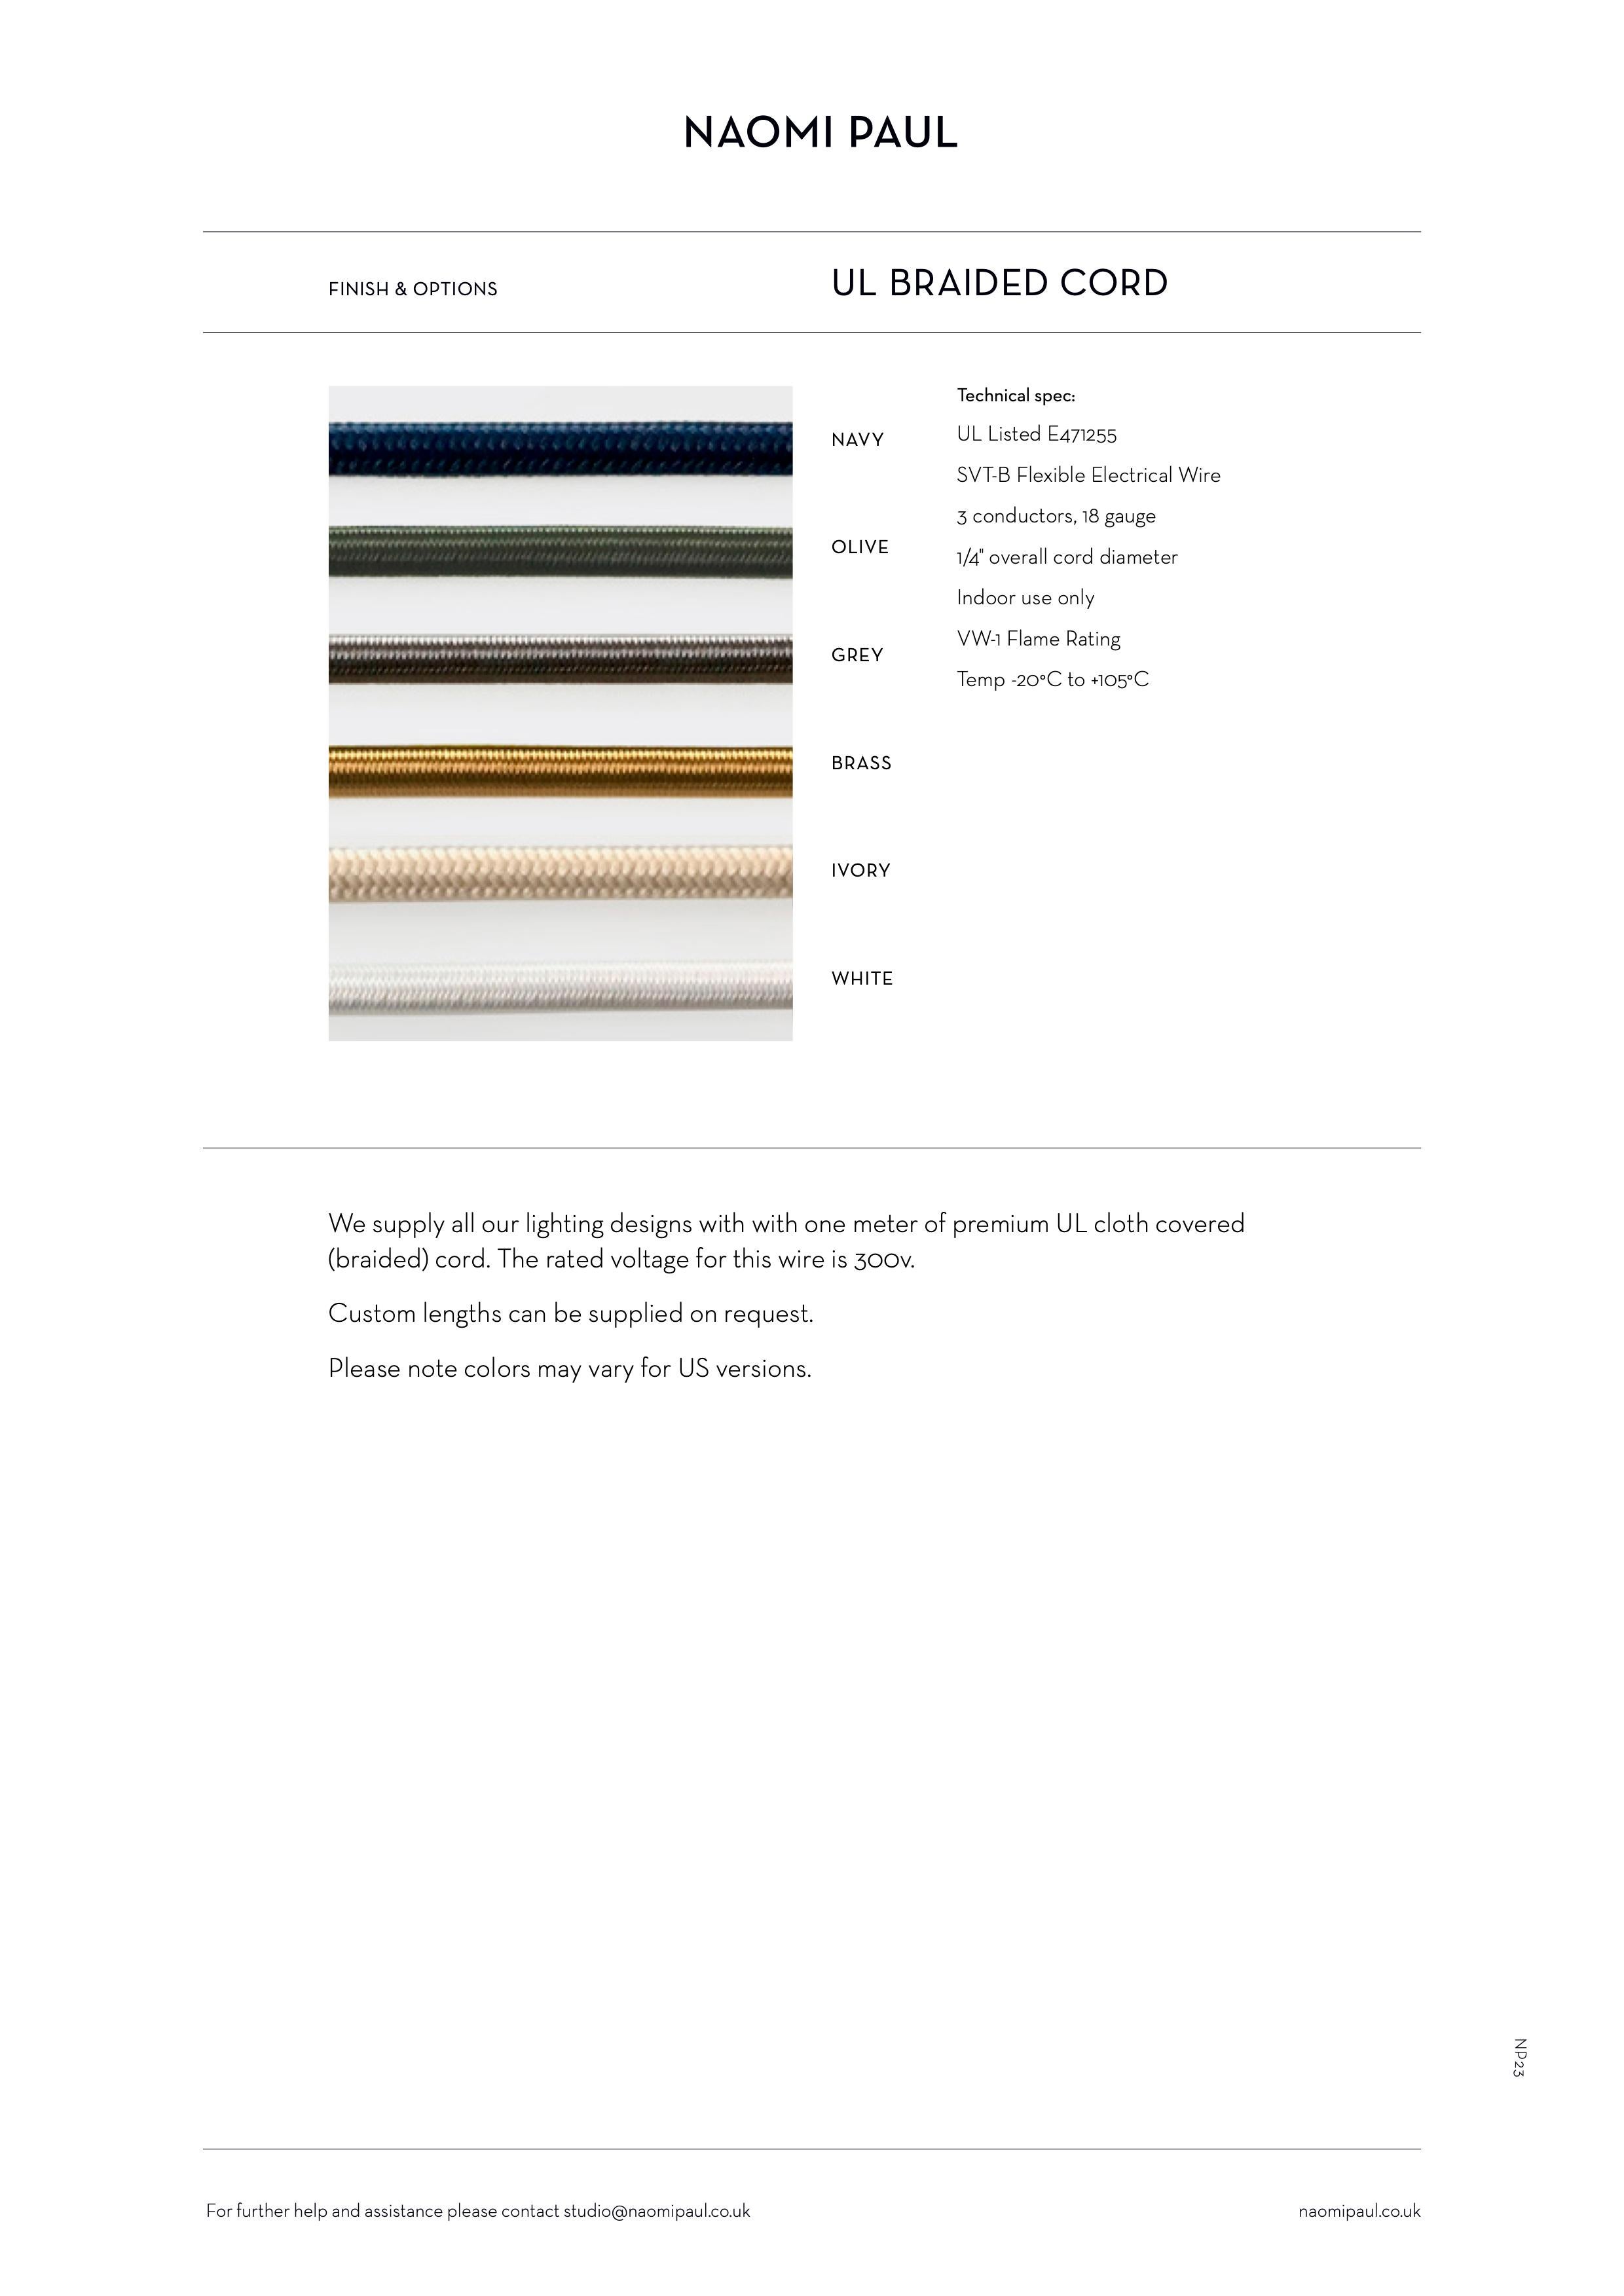 Brass SS01 50/50 Pendant Light Ø60cm/23.6in, Hand Crocheted in 100% Egyptian Cotton